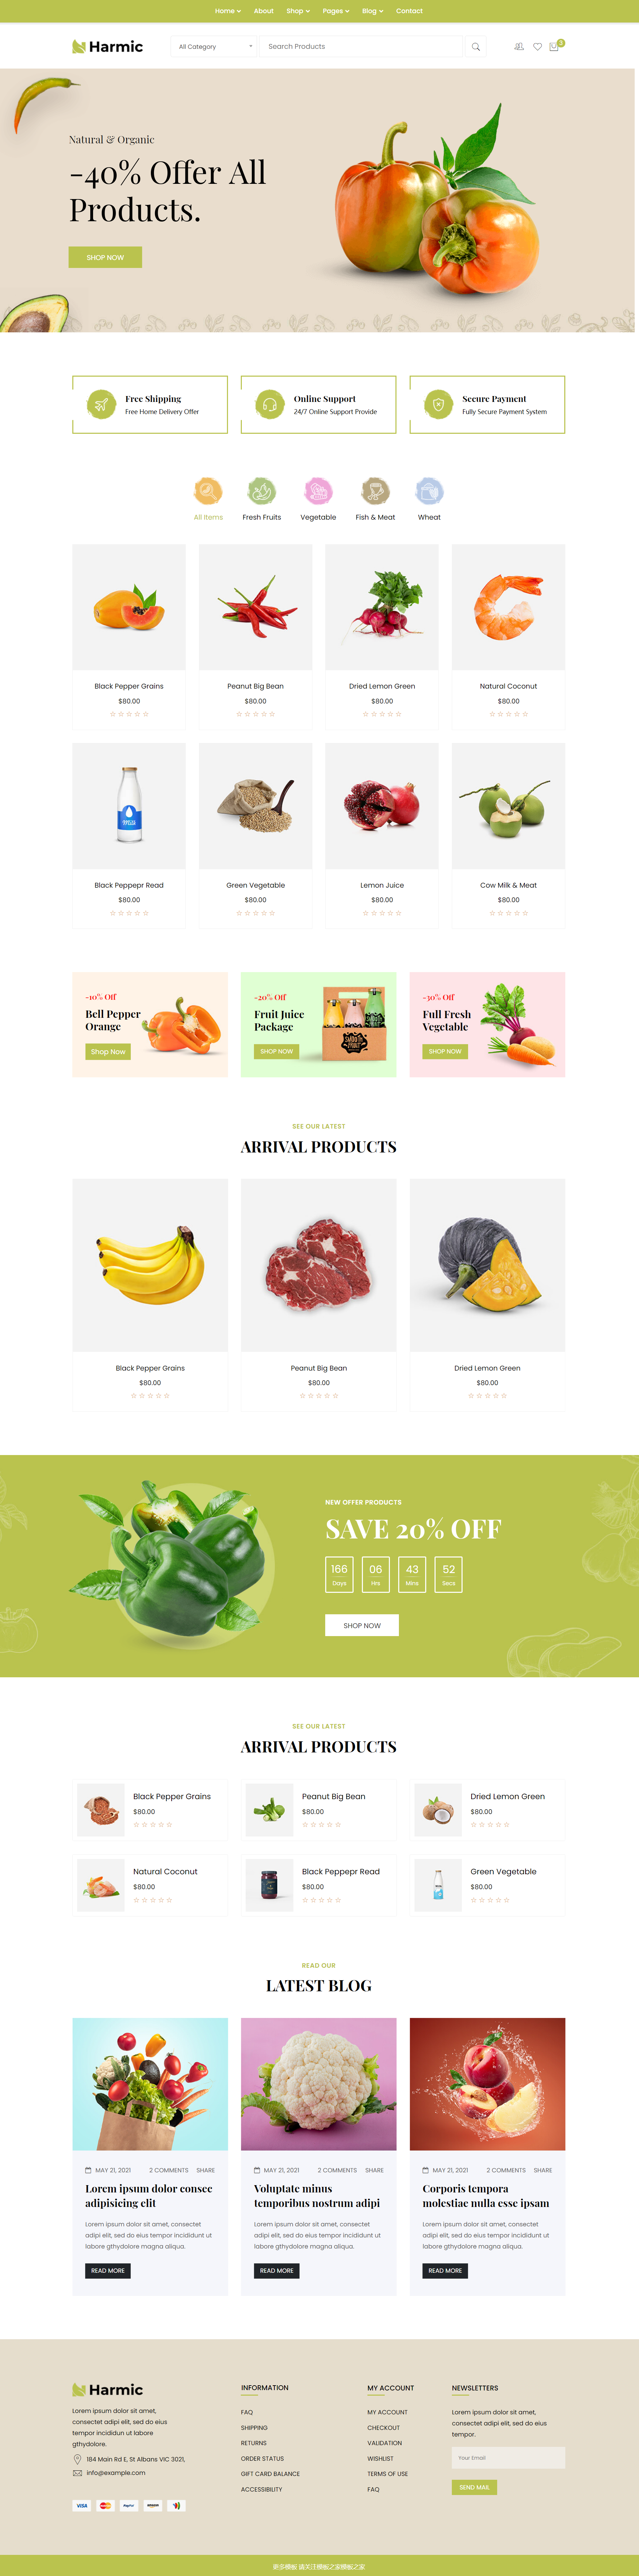 HTML5红色宽屏样式蔬菜水果生鲜企业网站模板代码下载